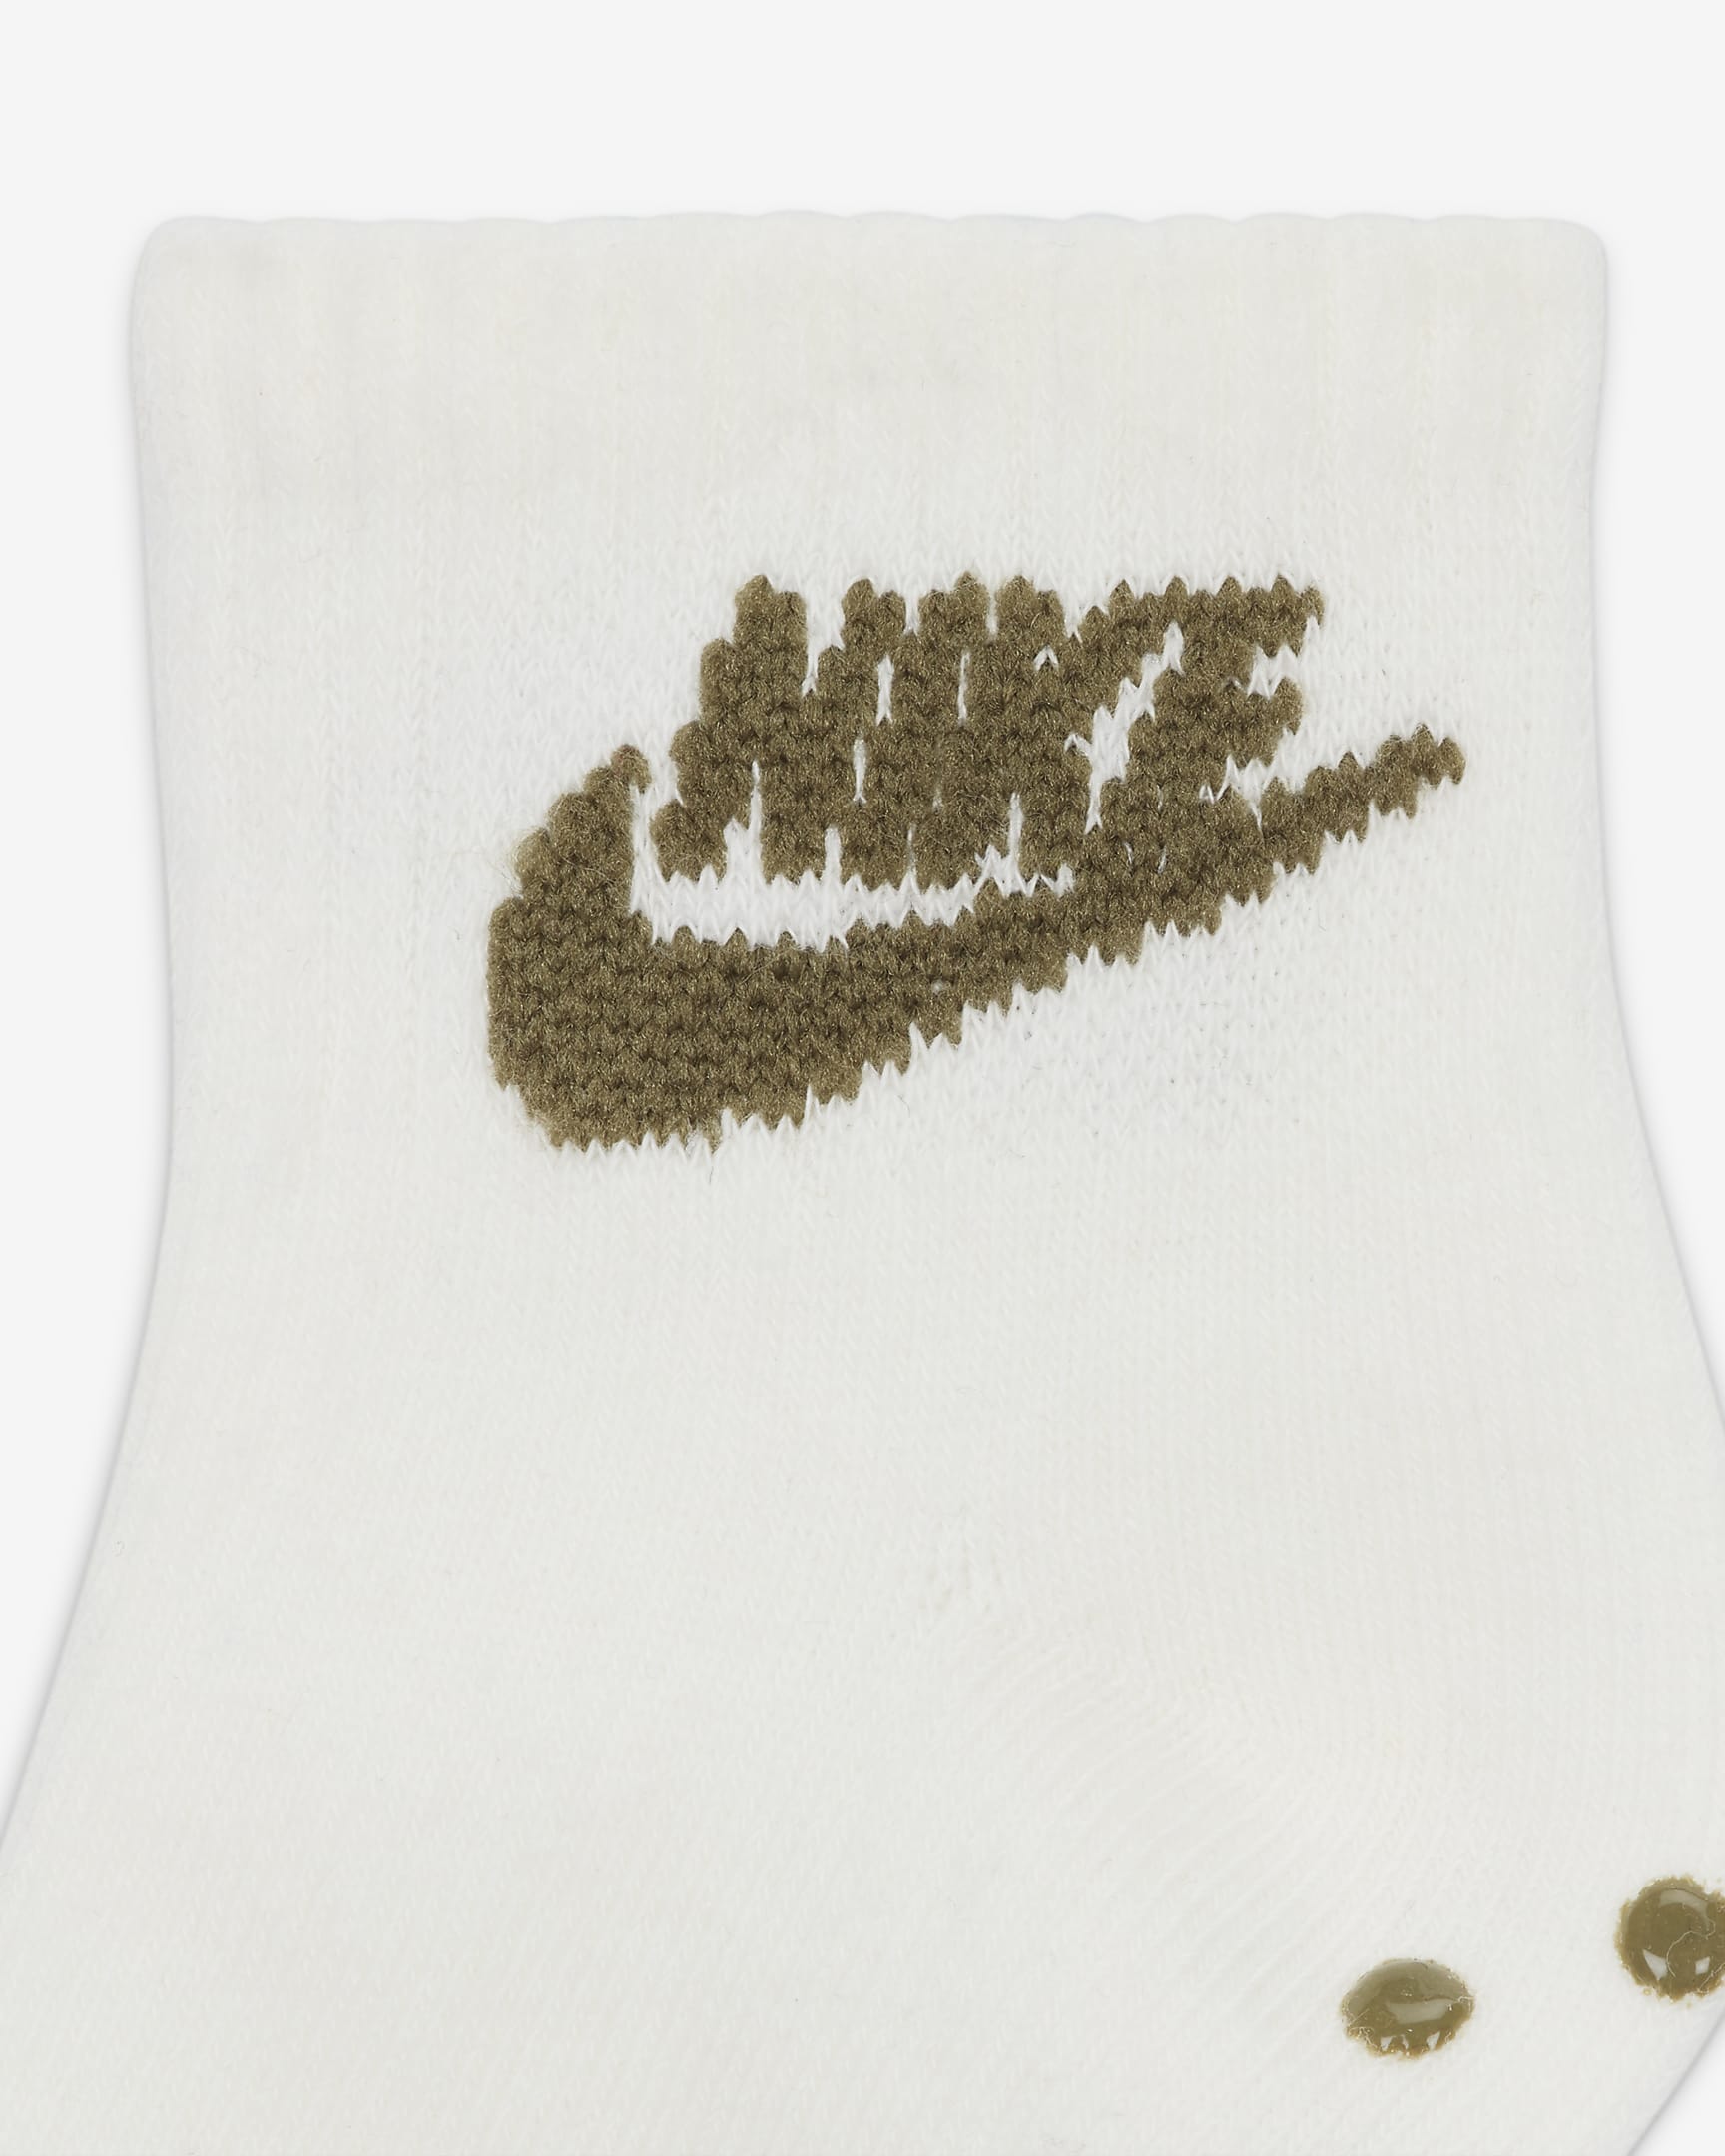 Nike Snow Day Grip Socks (3 Pairs) Baby Socks. Nike.com